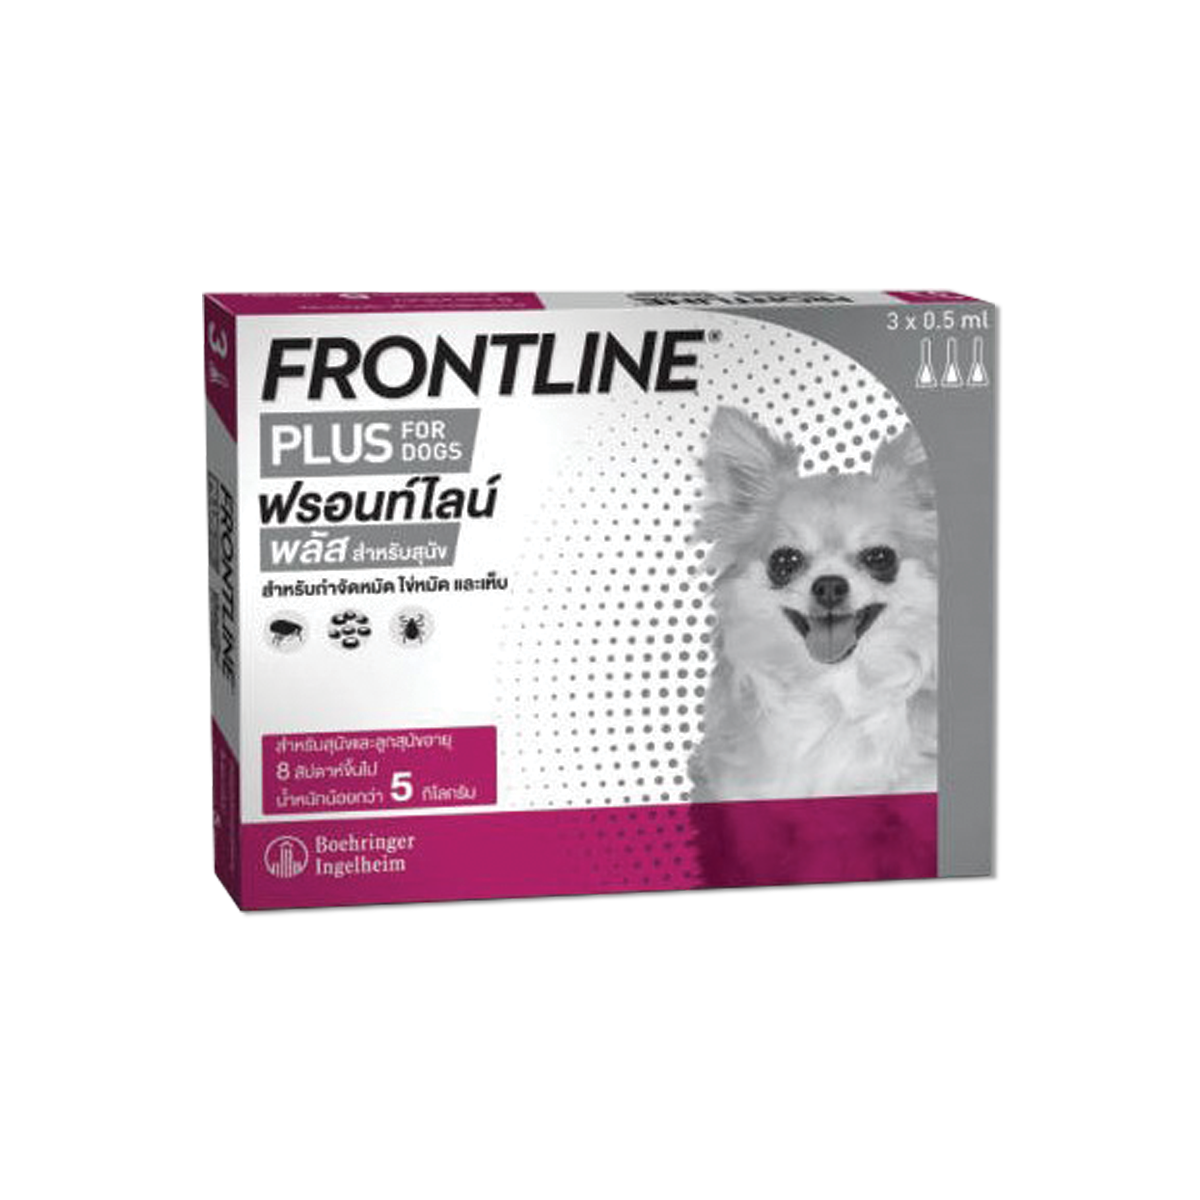 Frontline Plus Dog Size XS ฟรอนท์ไลน์ พลัส ยาหยดกำจัดเห็บหมัดสำหรับสุนัข (น้ำหนักน้อยกว่า 5 กก.)